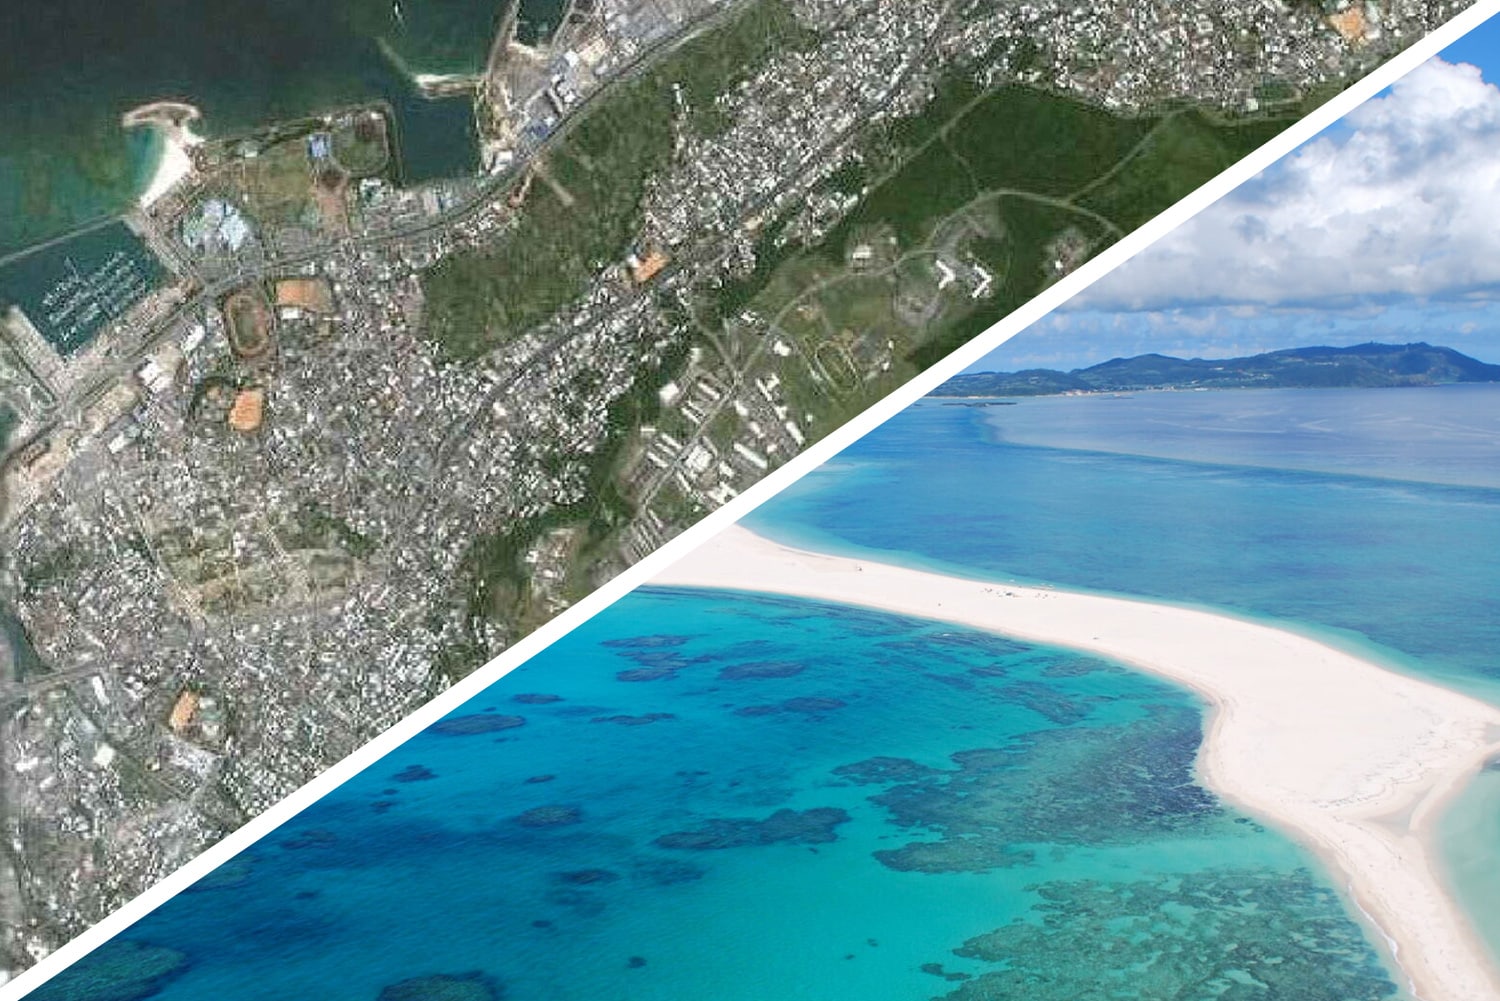 Okinawa: Past, Present, and Future